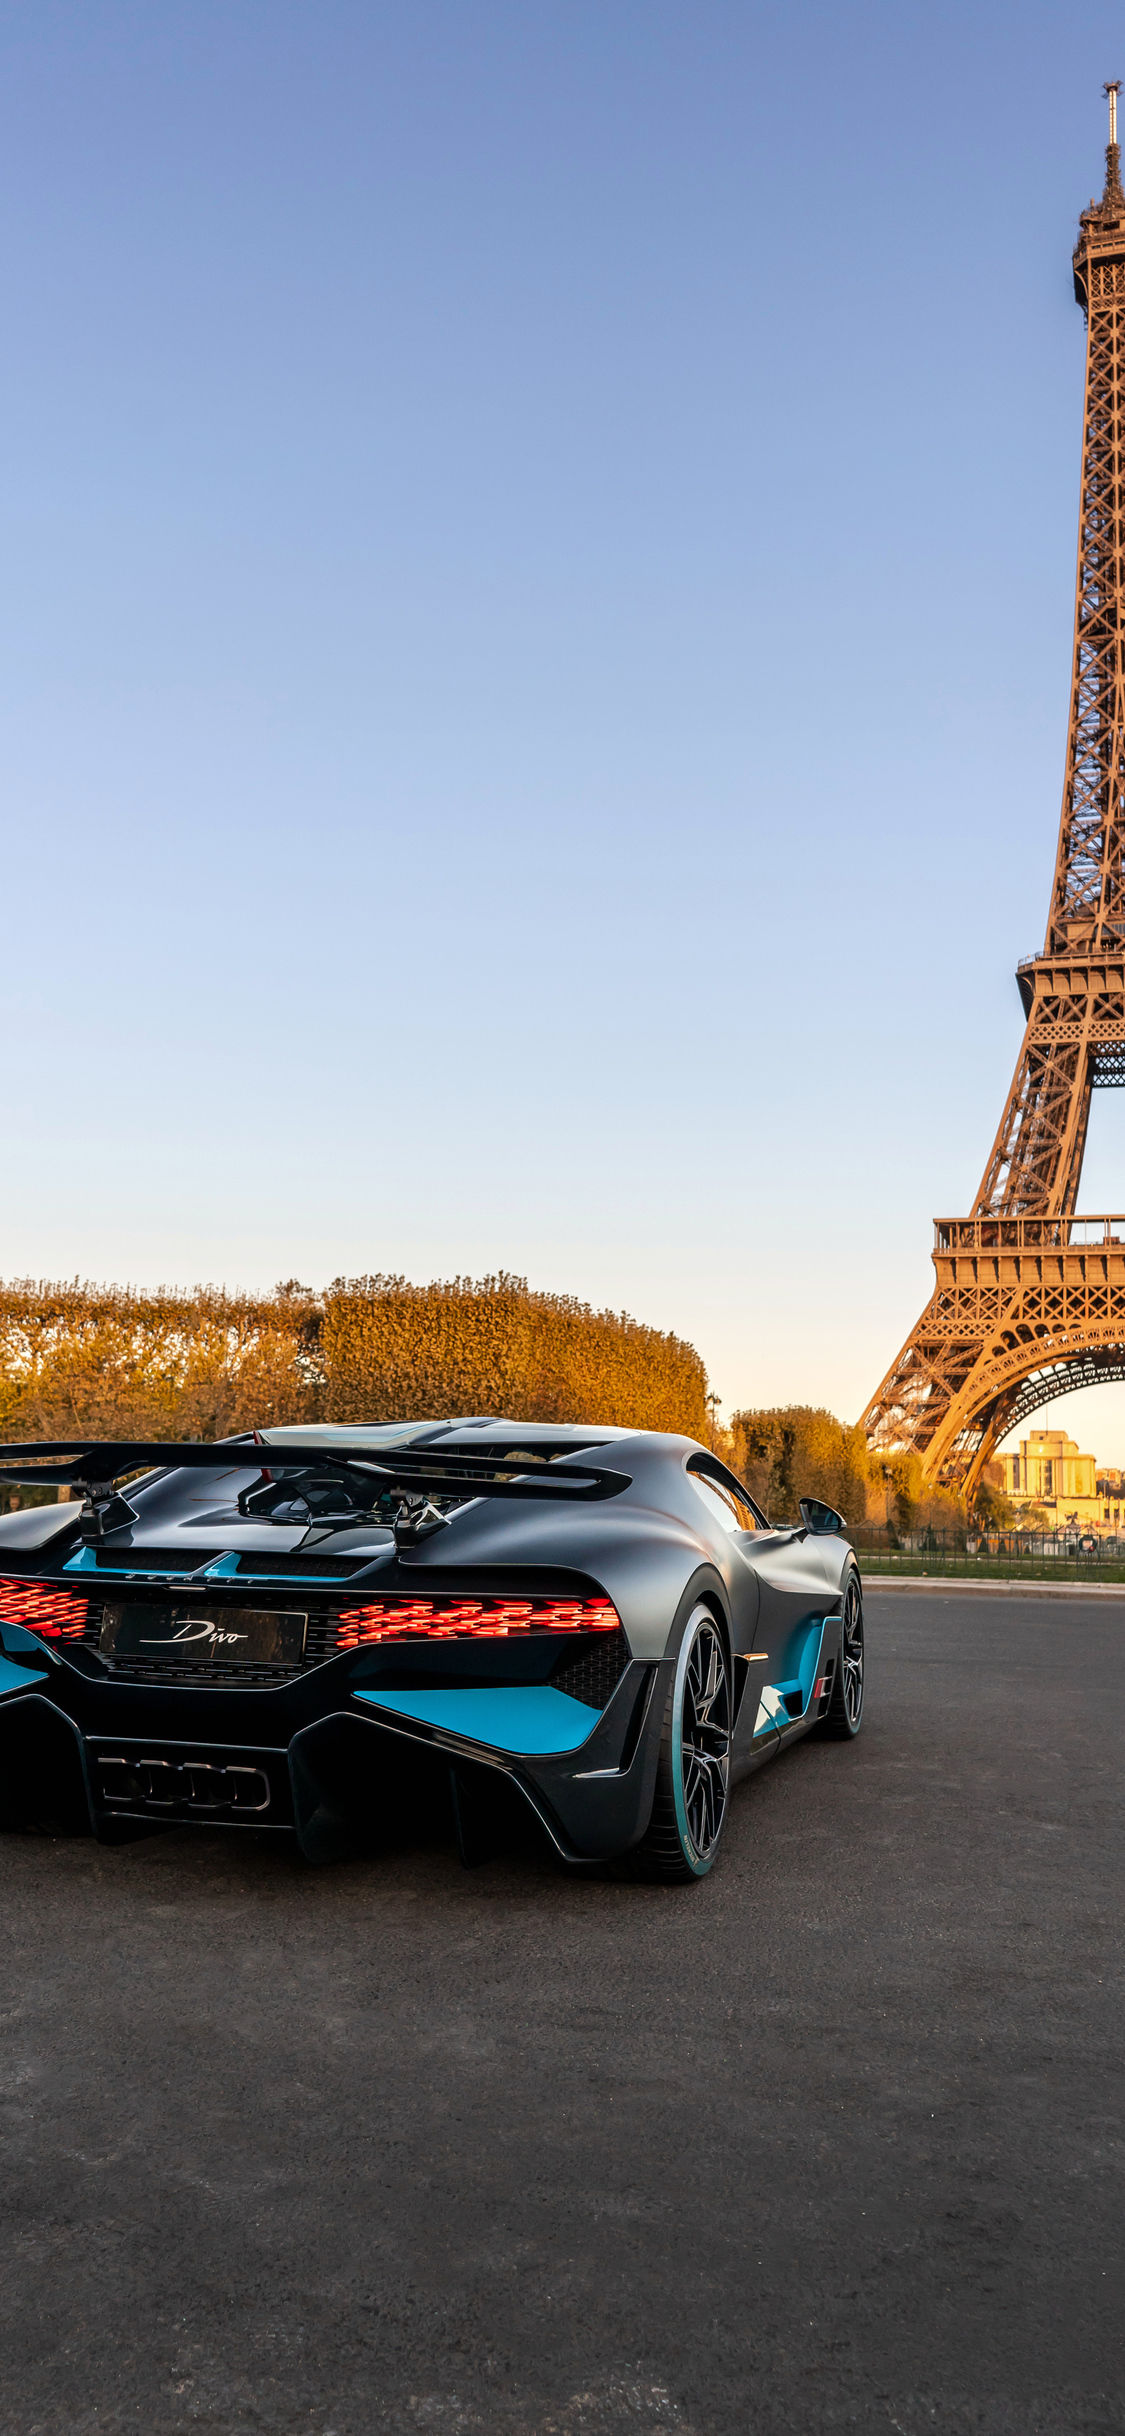 Bugatti Divo 2018 France iPhone XS, iPhone 10